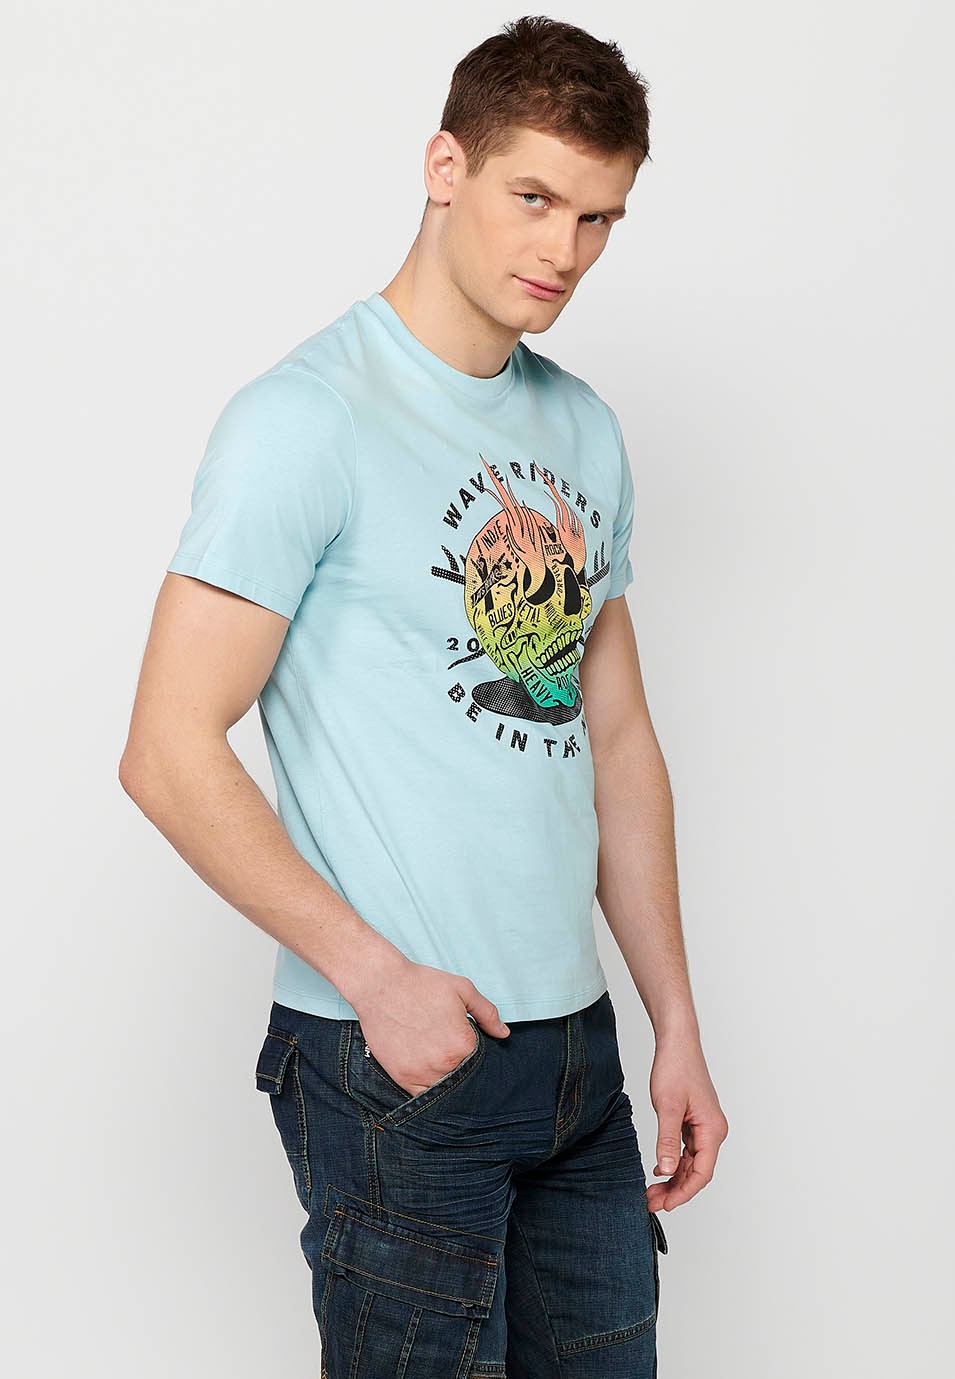 Camiseta manga corta de algodon, estampada, color azul para hombre